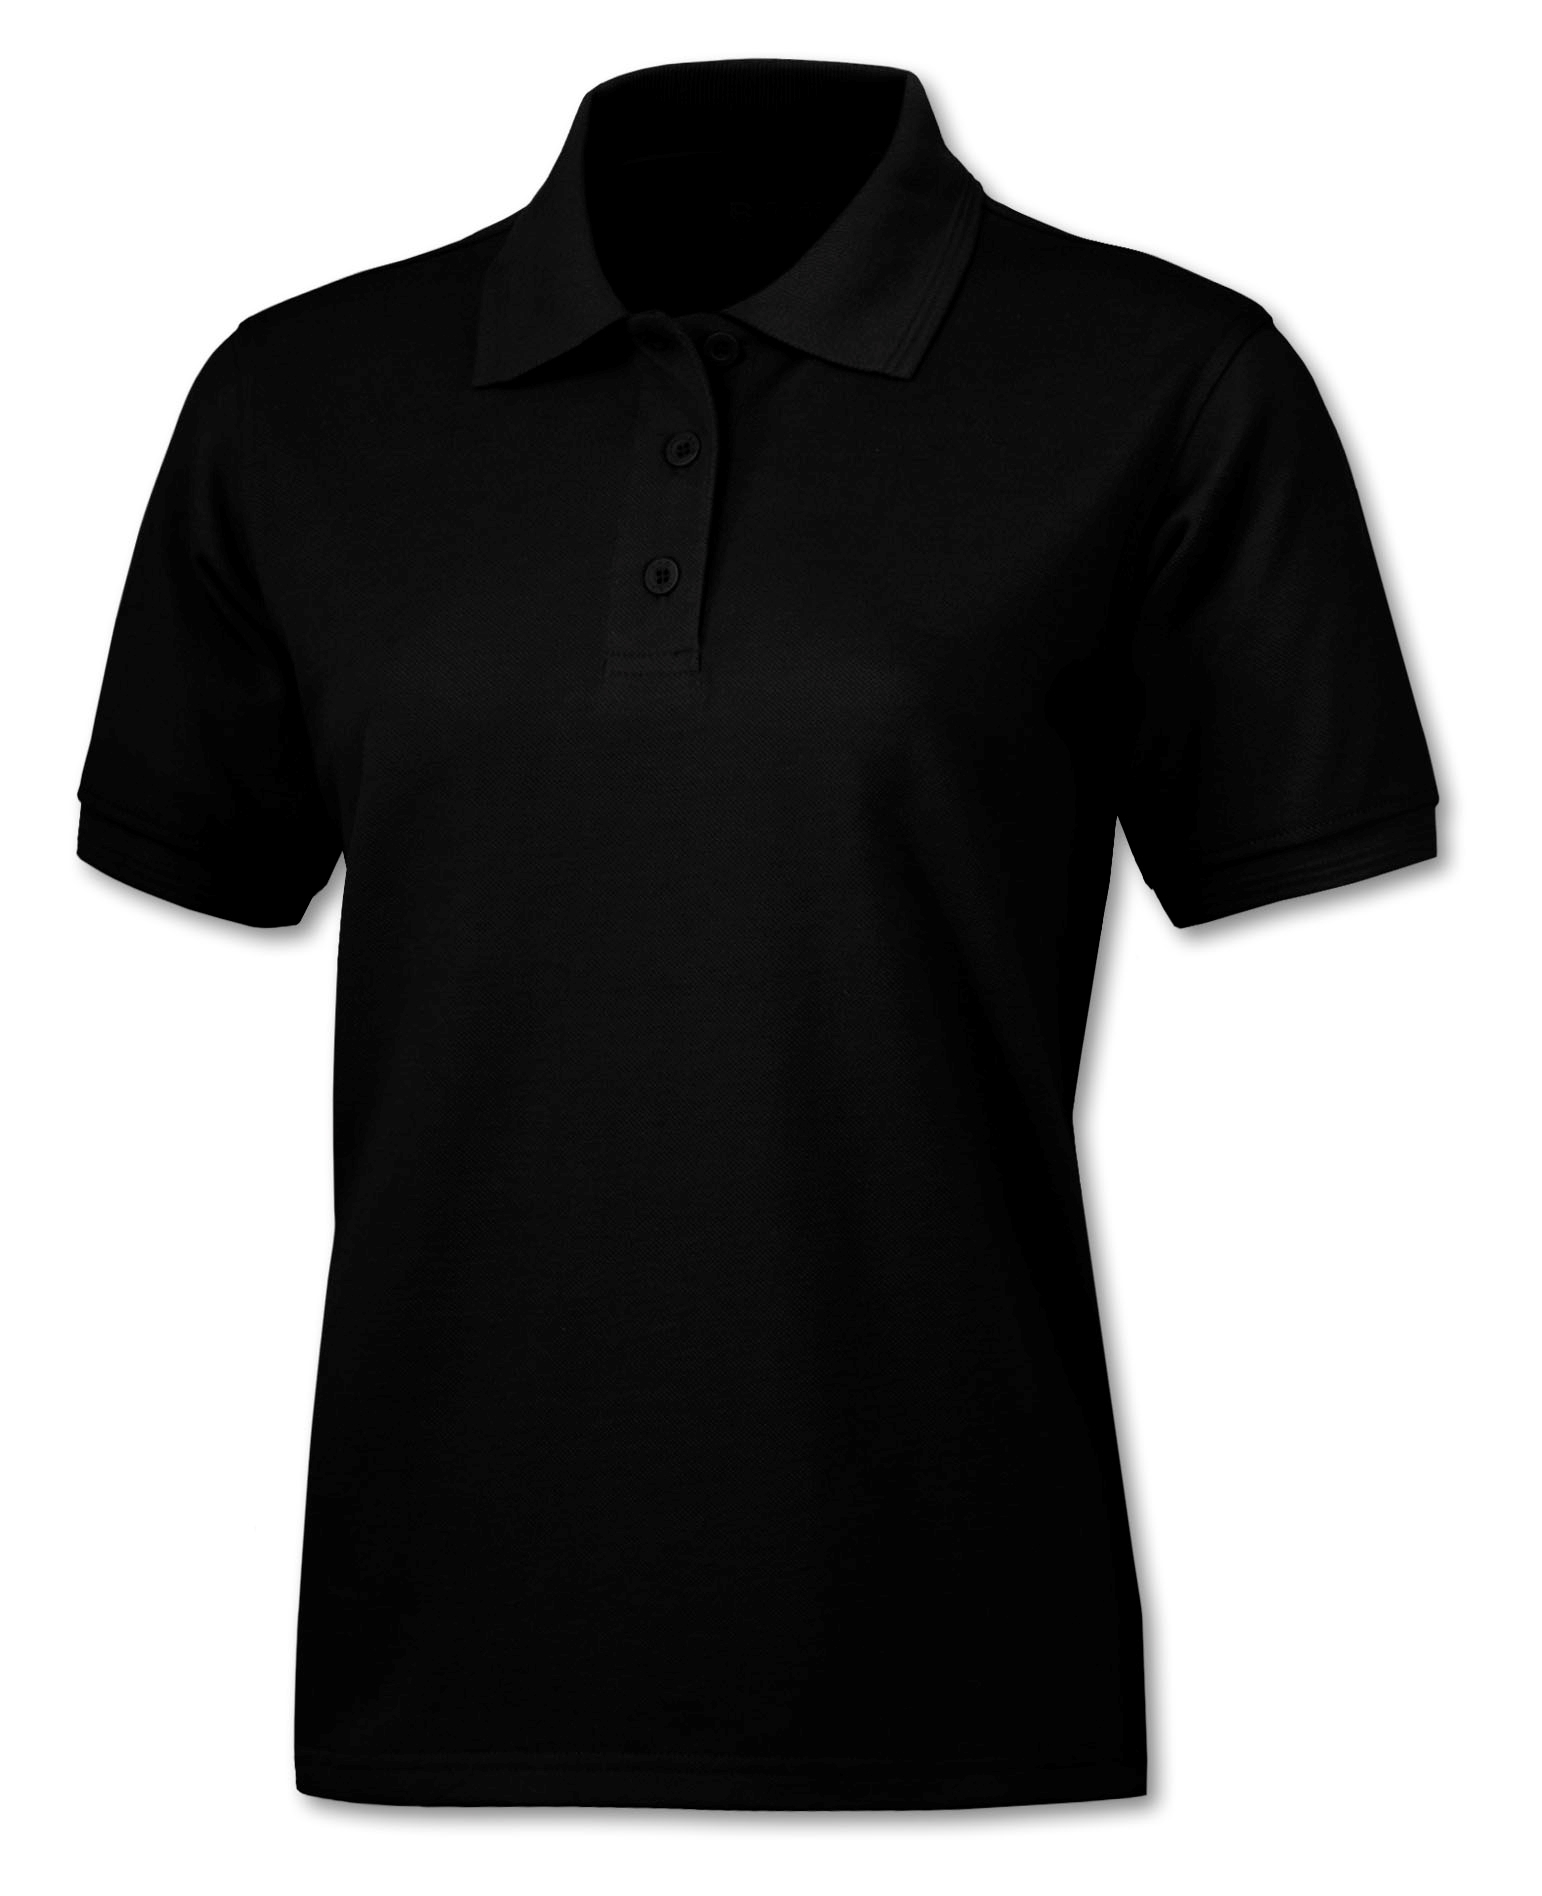 BAW Athletic Wear ED365L - Ladies Everyday Polo Short Sleeve